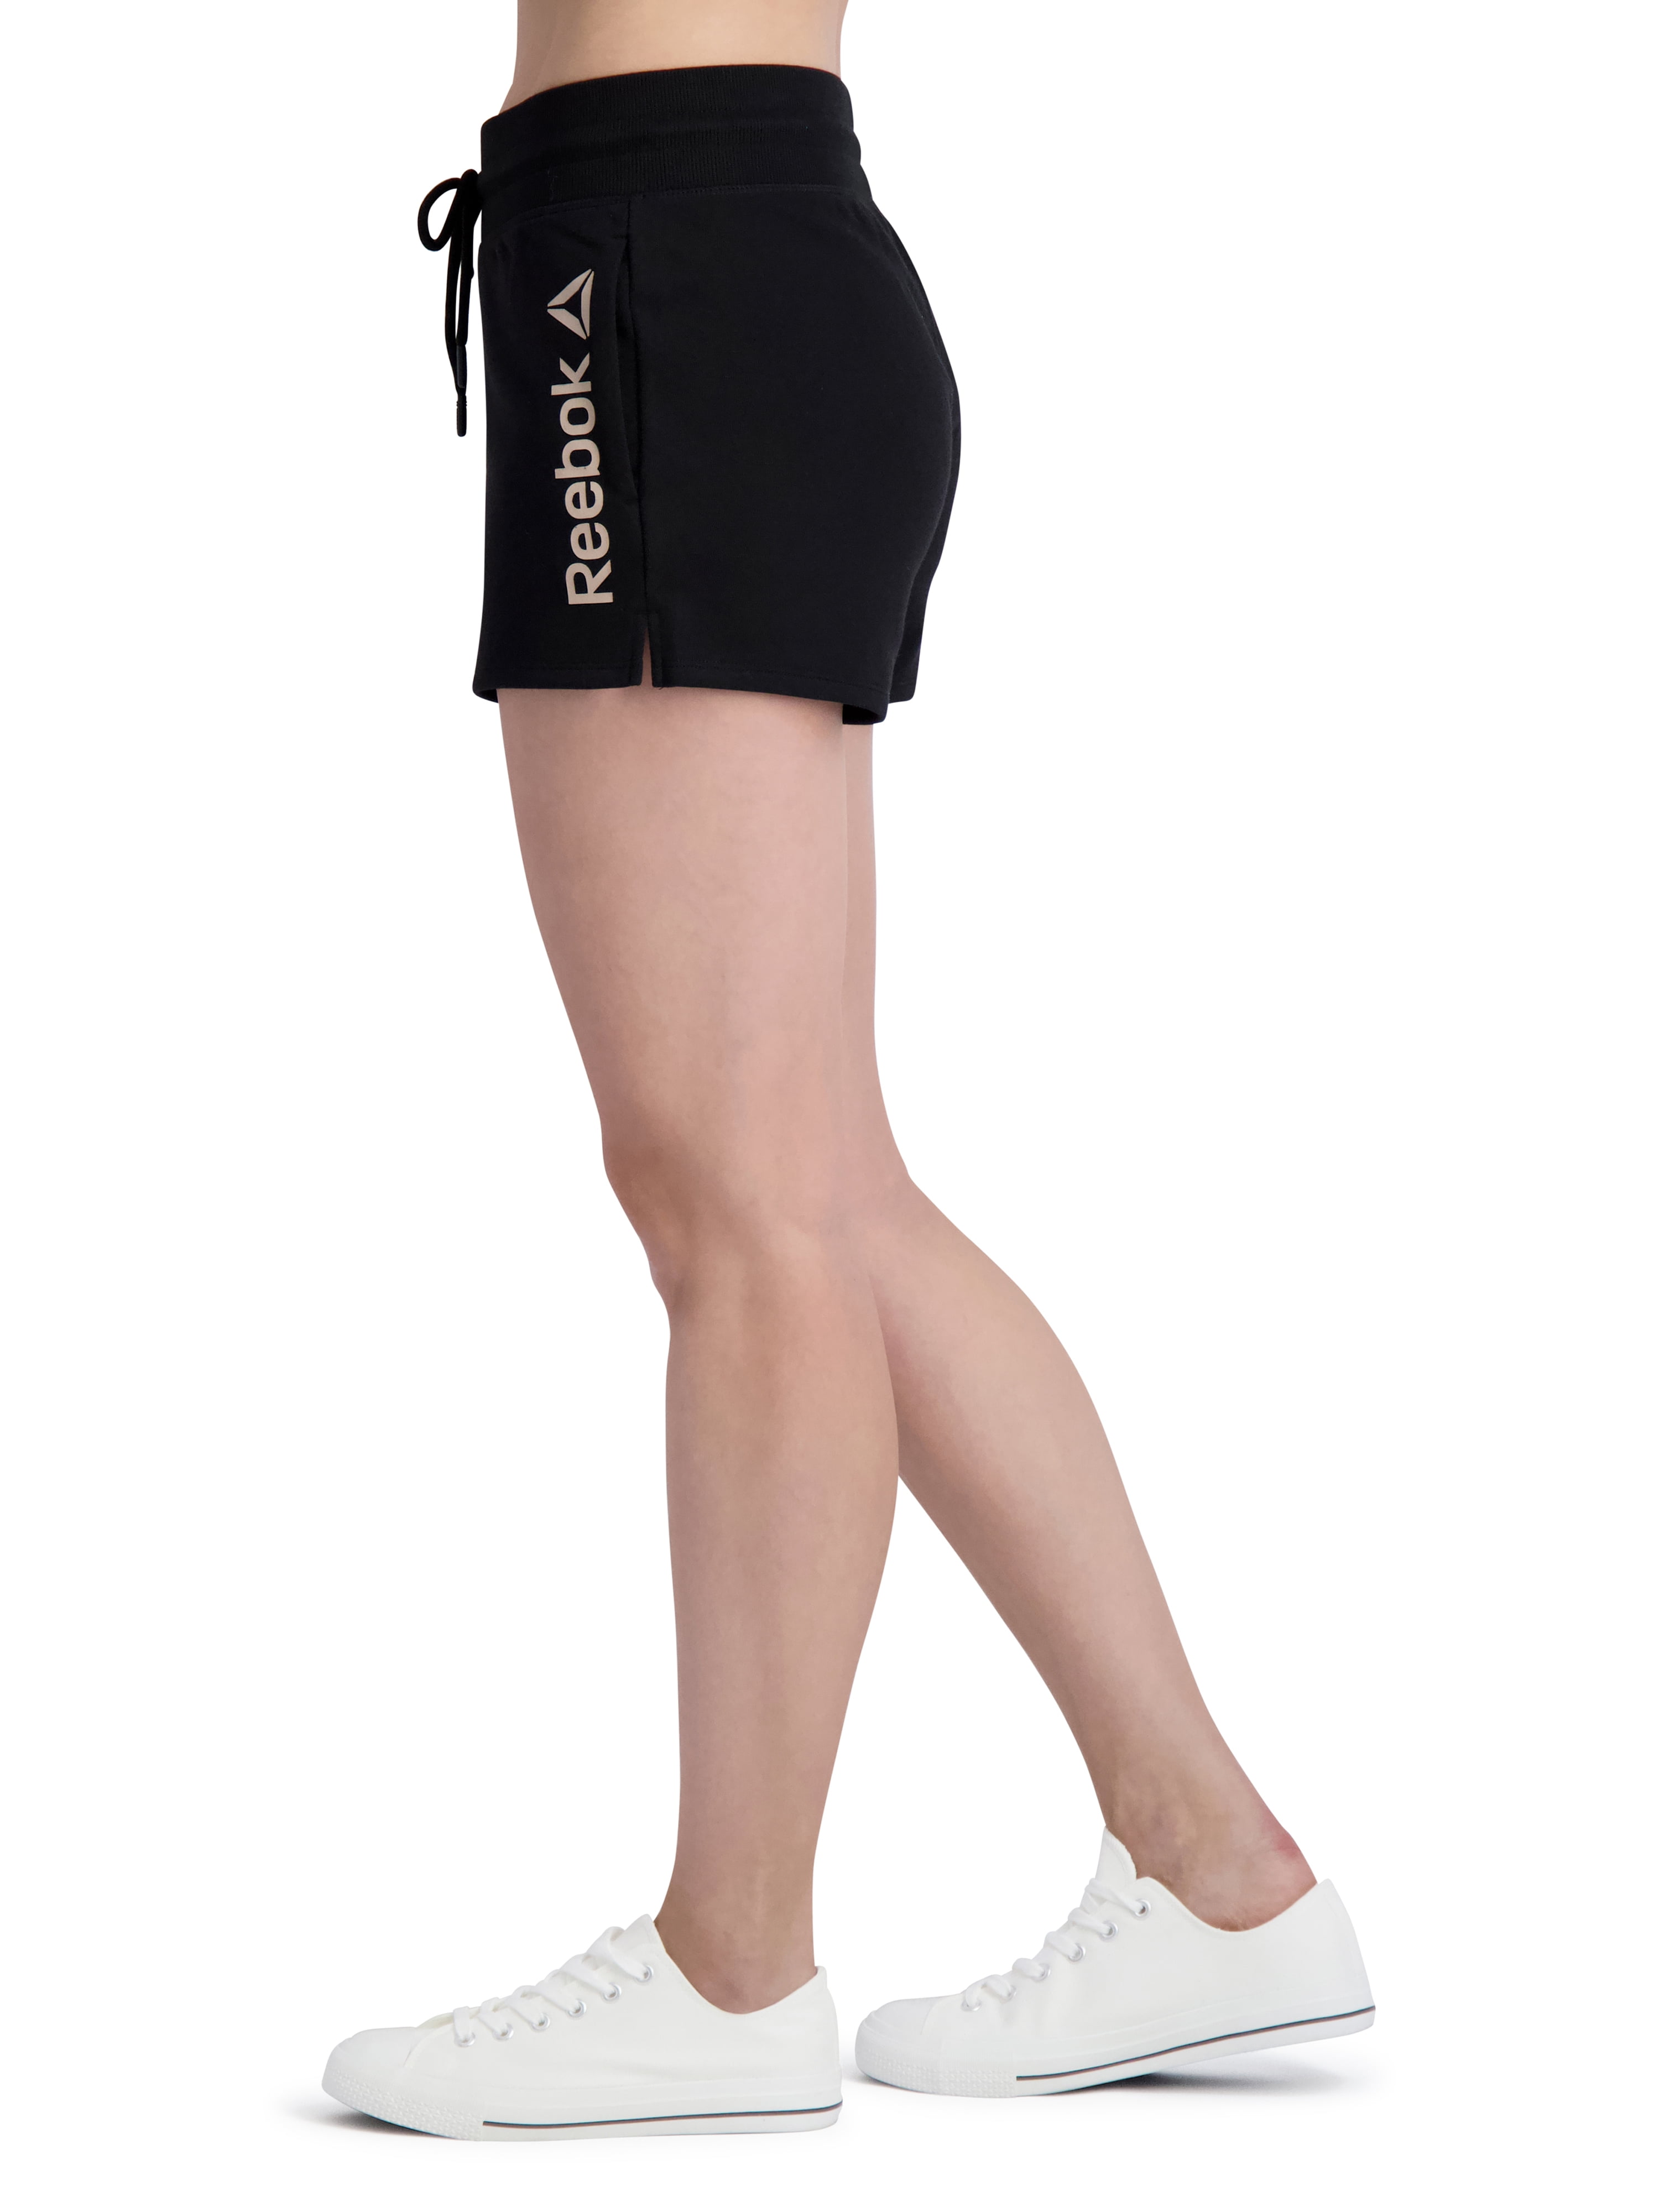 Reebok Women's Level Short with Side Pockets and Back Woven Pocket Walmart.com